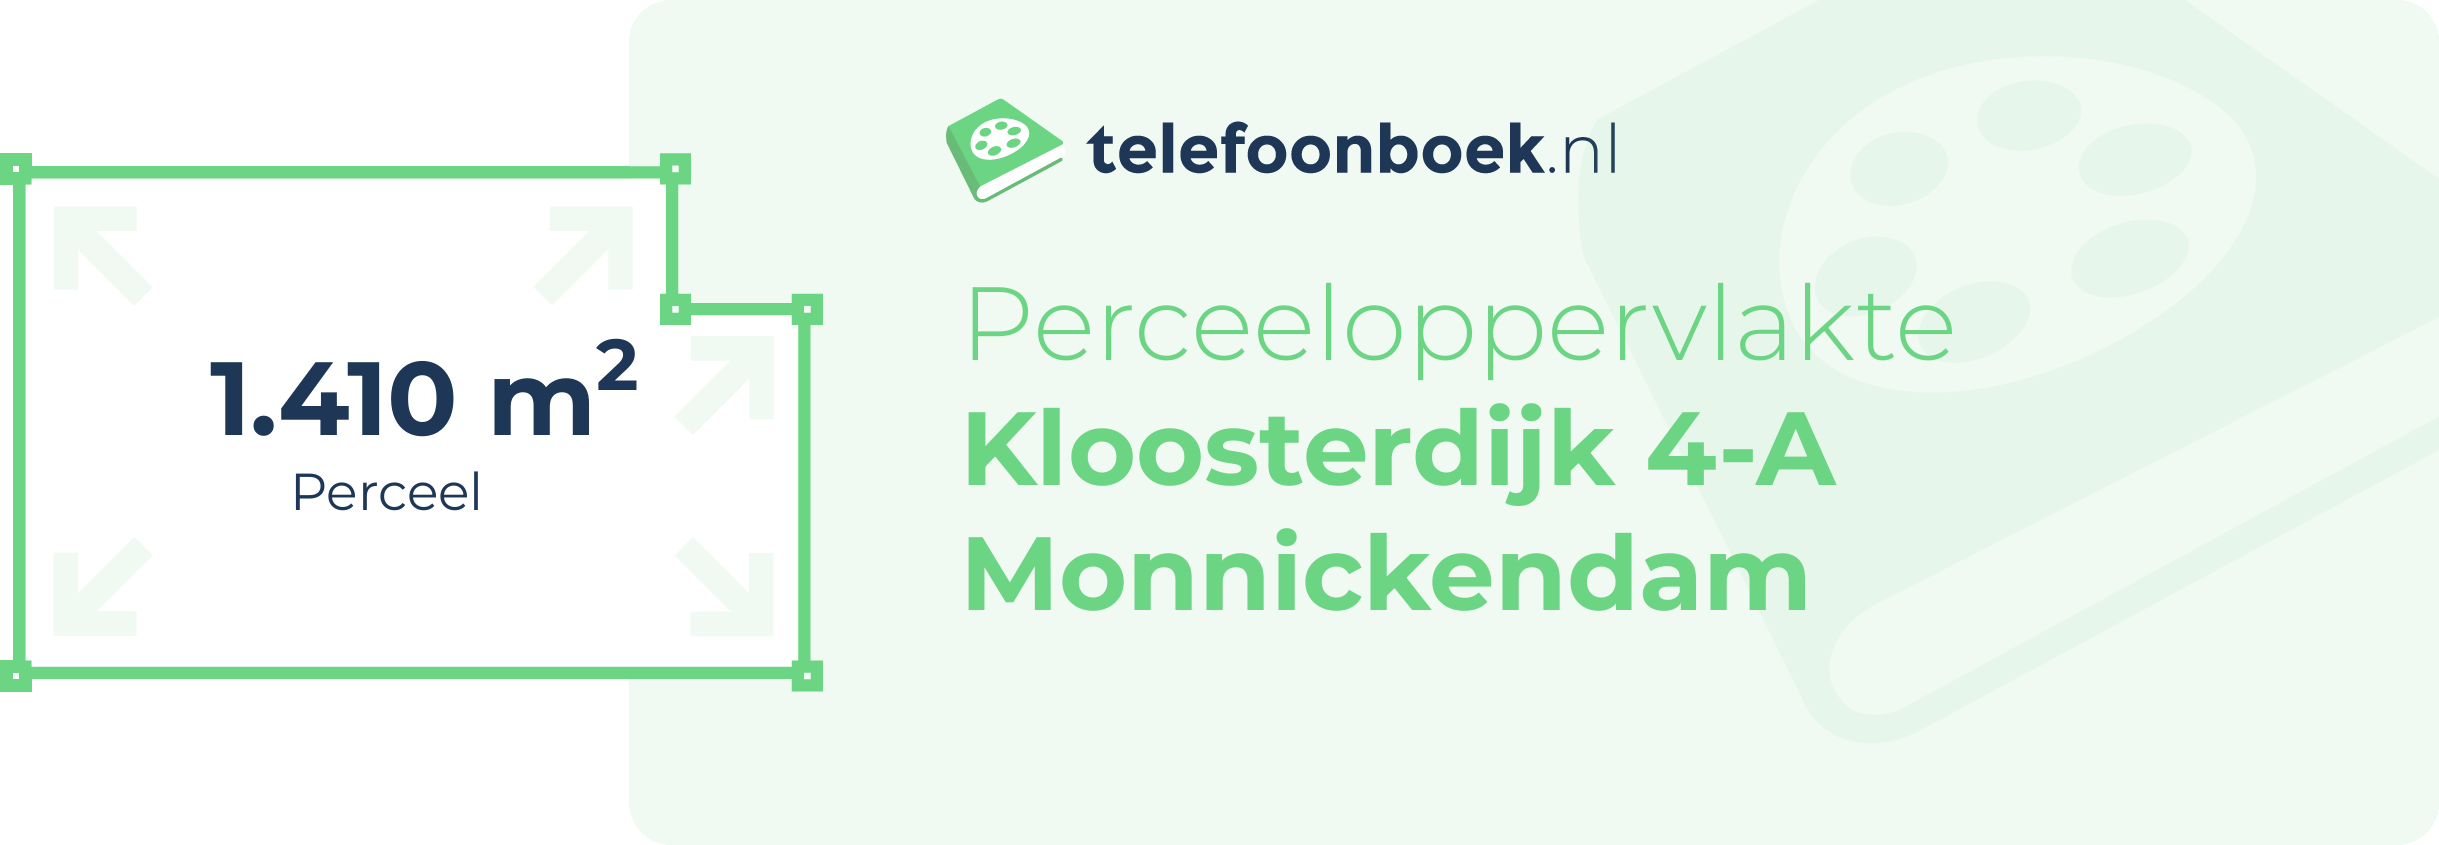 Perceeloppervlakte Kloosterdijk 4-A Monnickendam